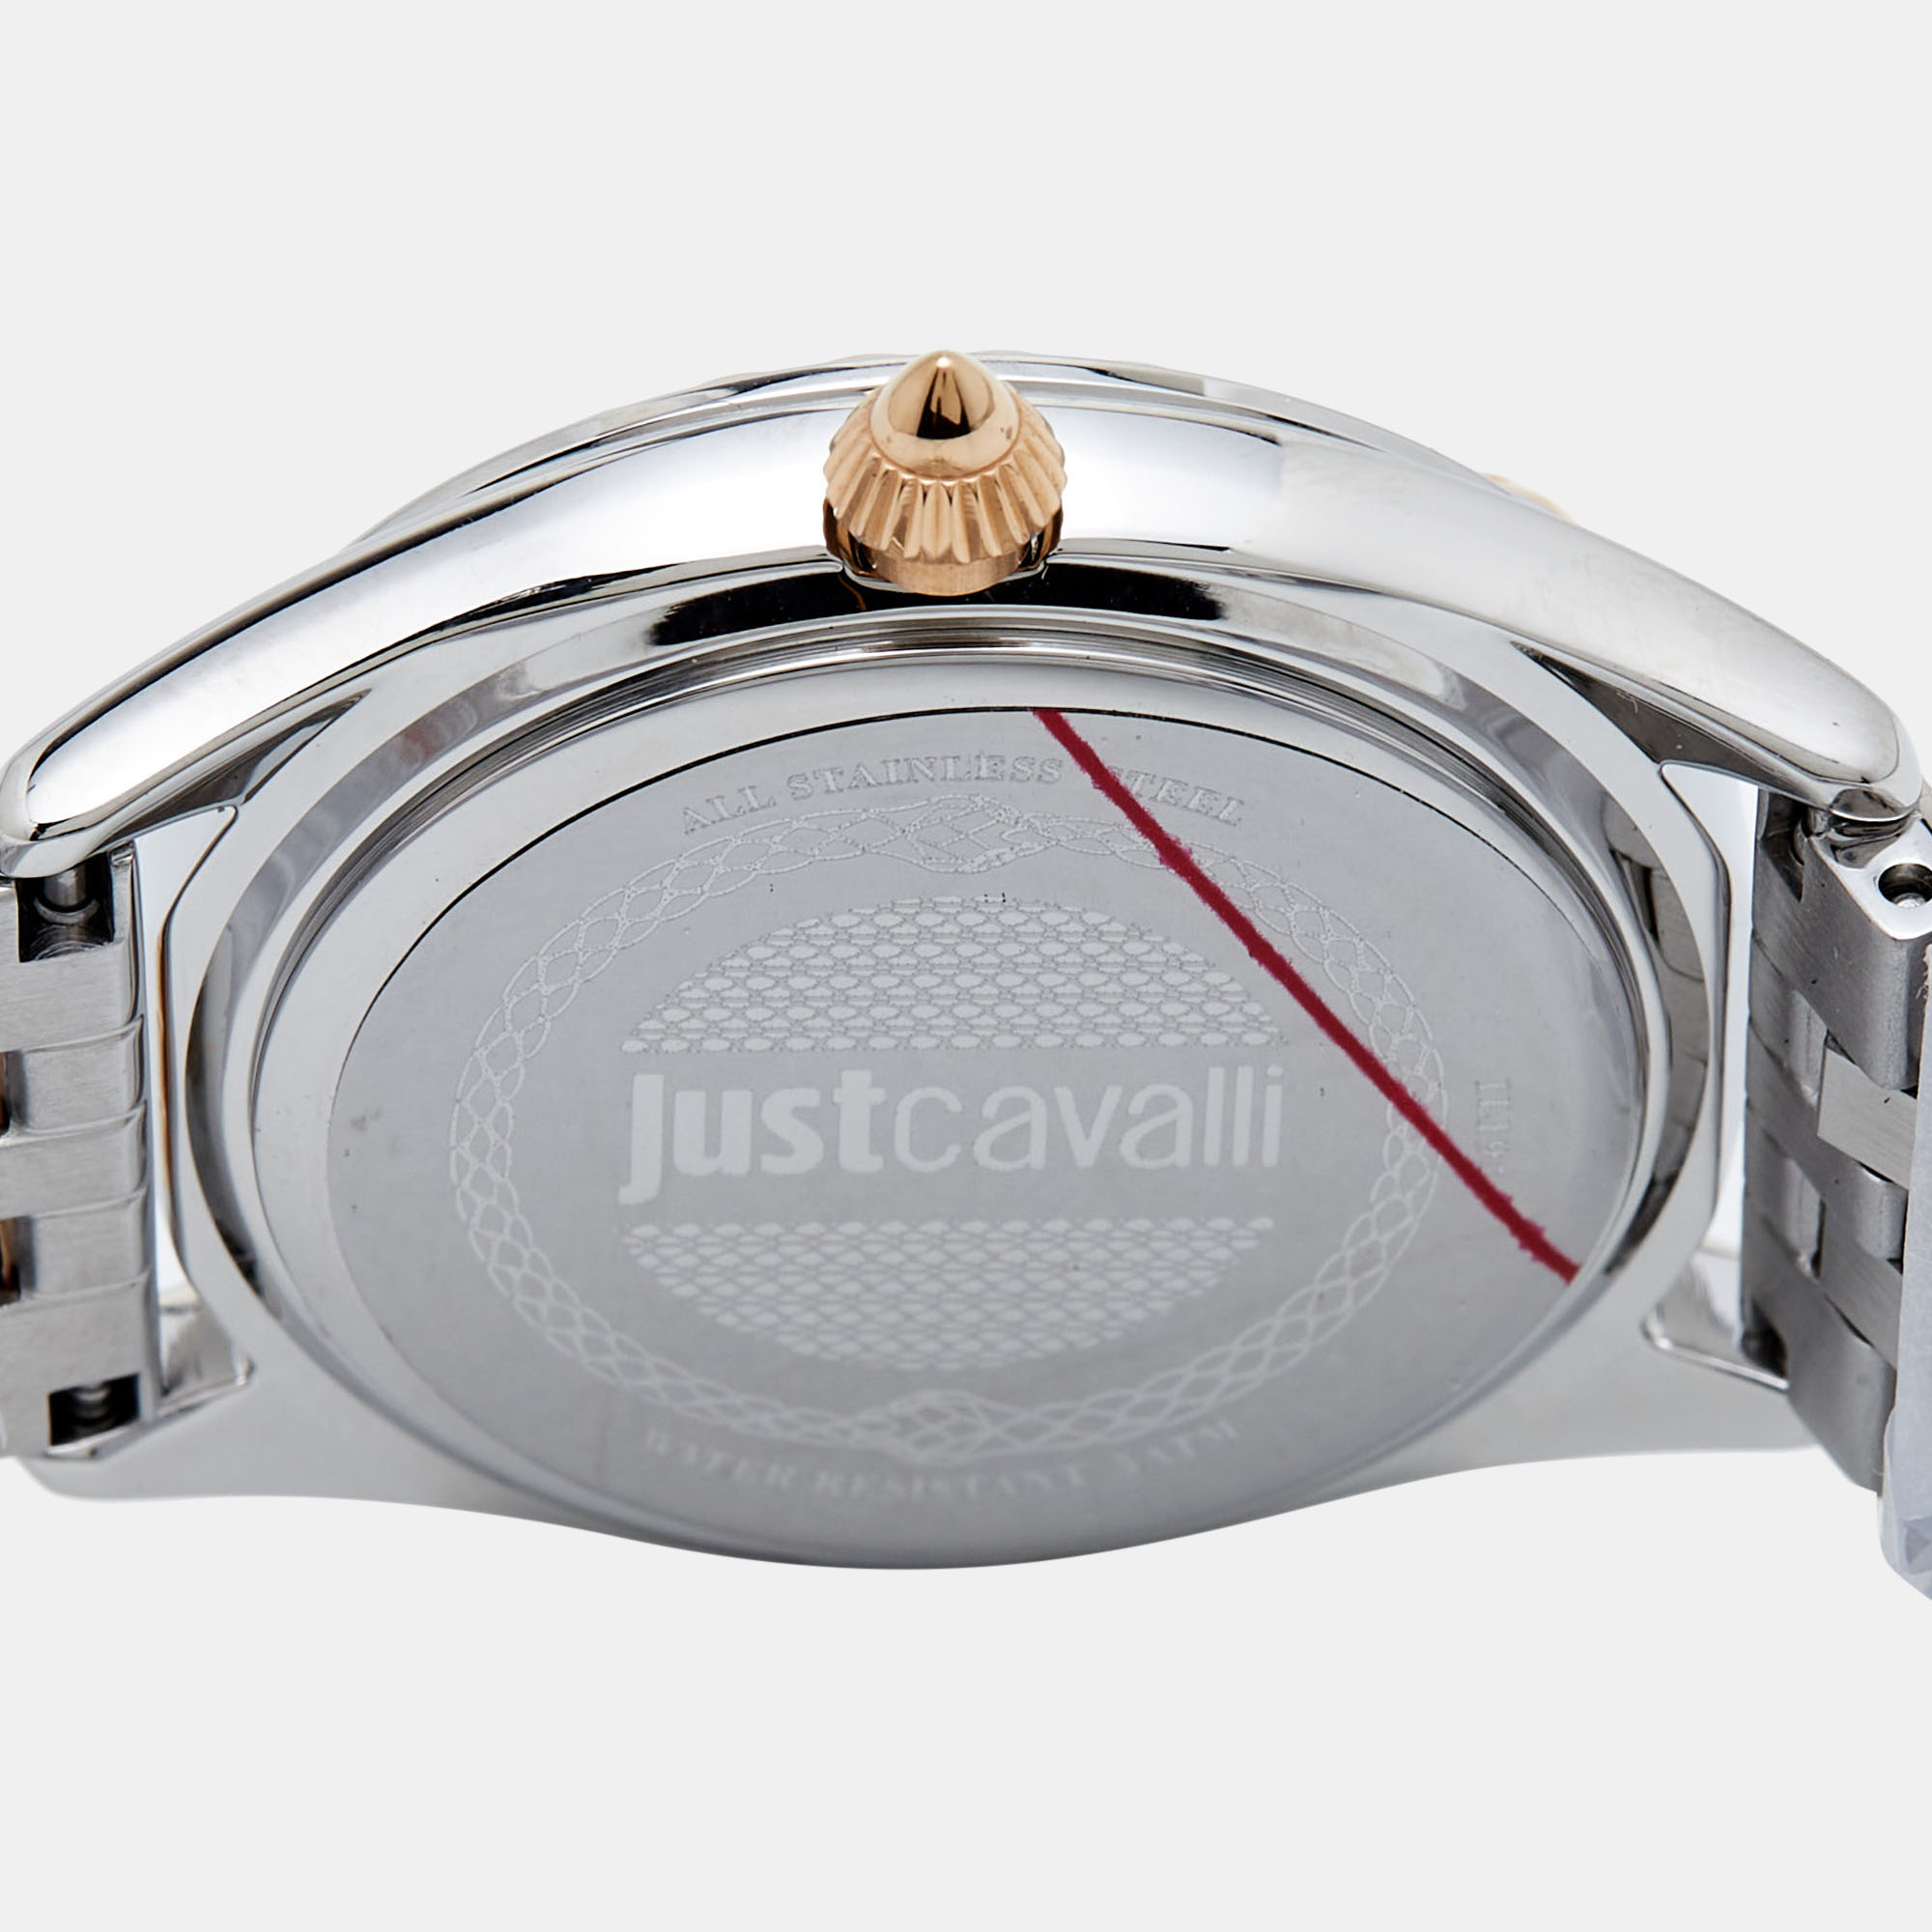 Just Cavalli Blue Two-Tone Stainless Steel Crystal Brillante JC1L195M0125 Women's Wristwatch 34 Mm